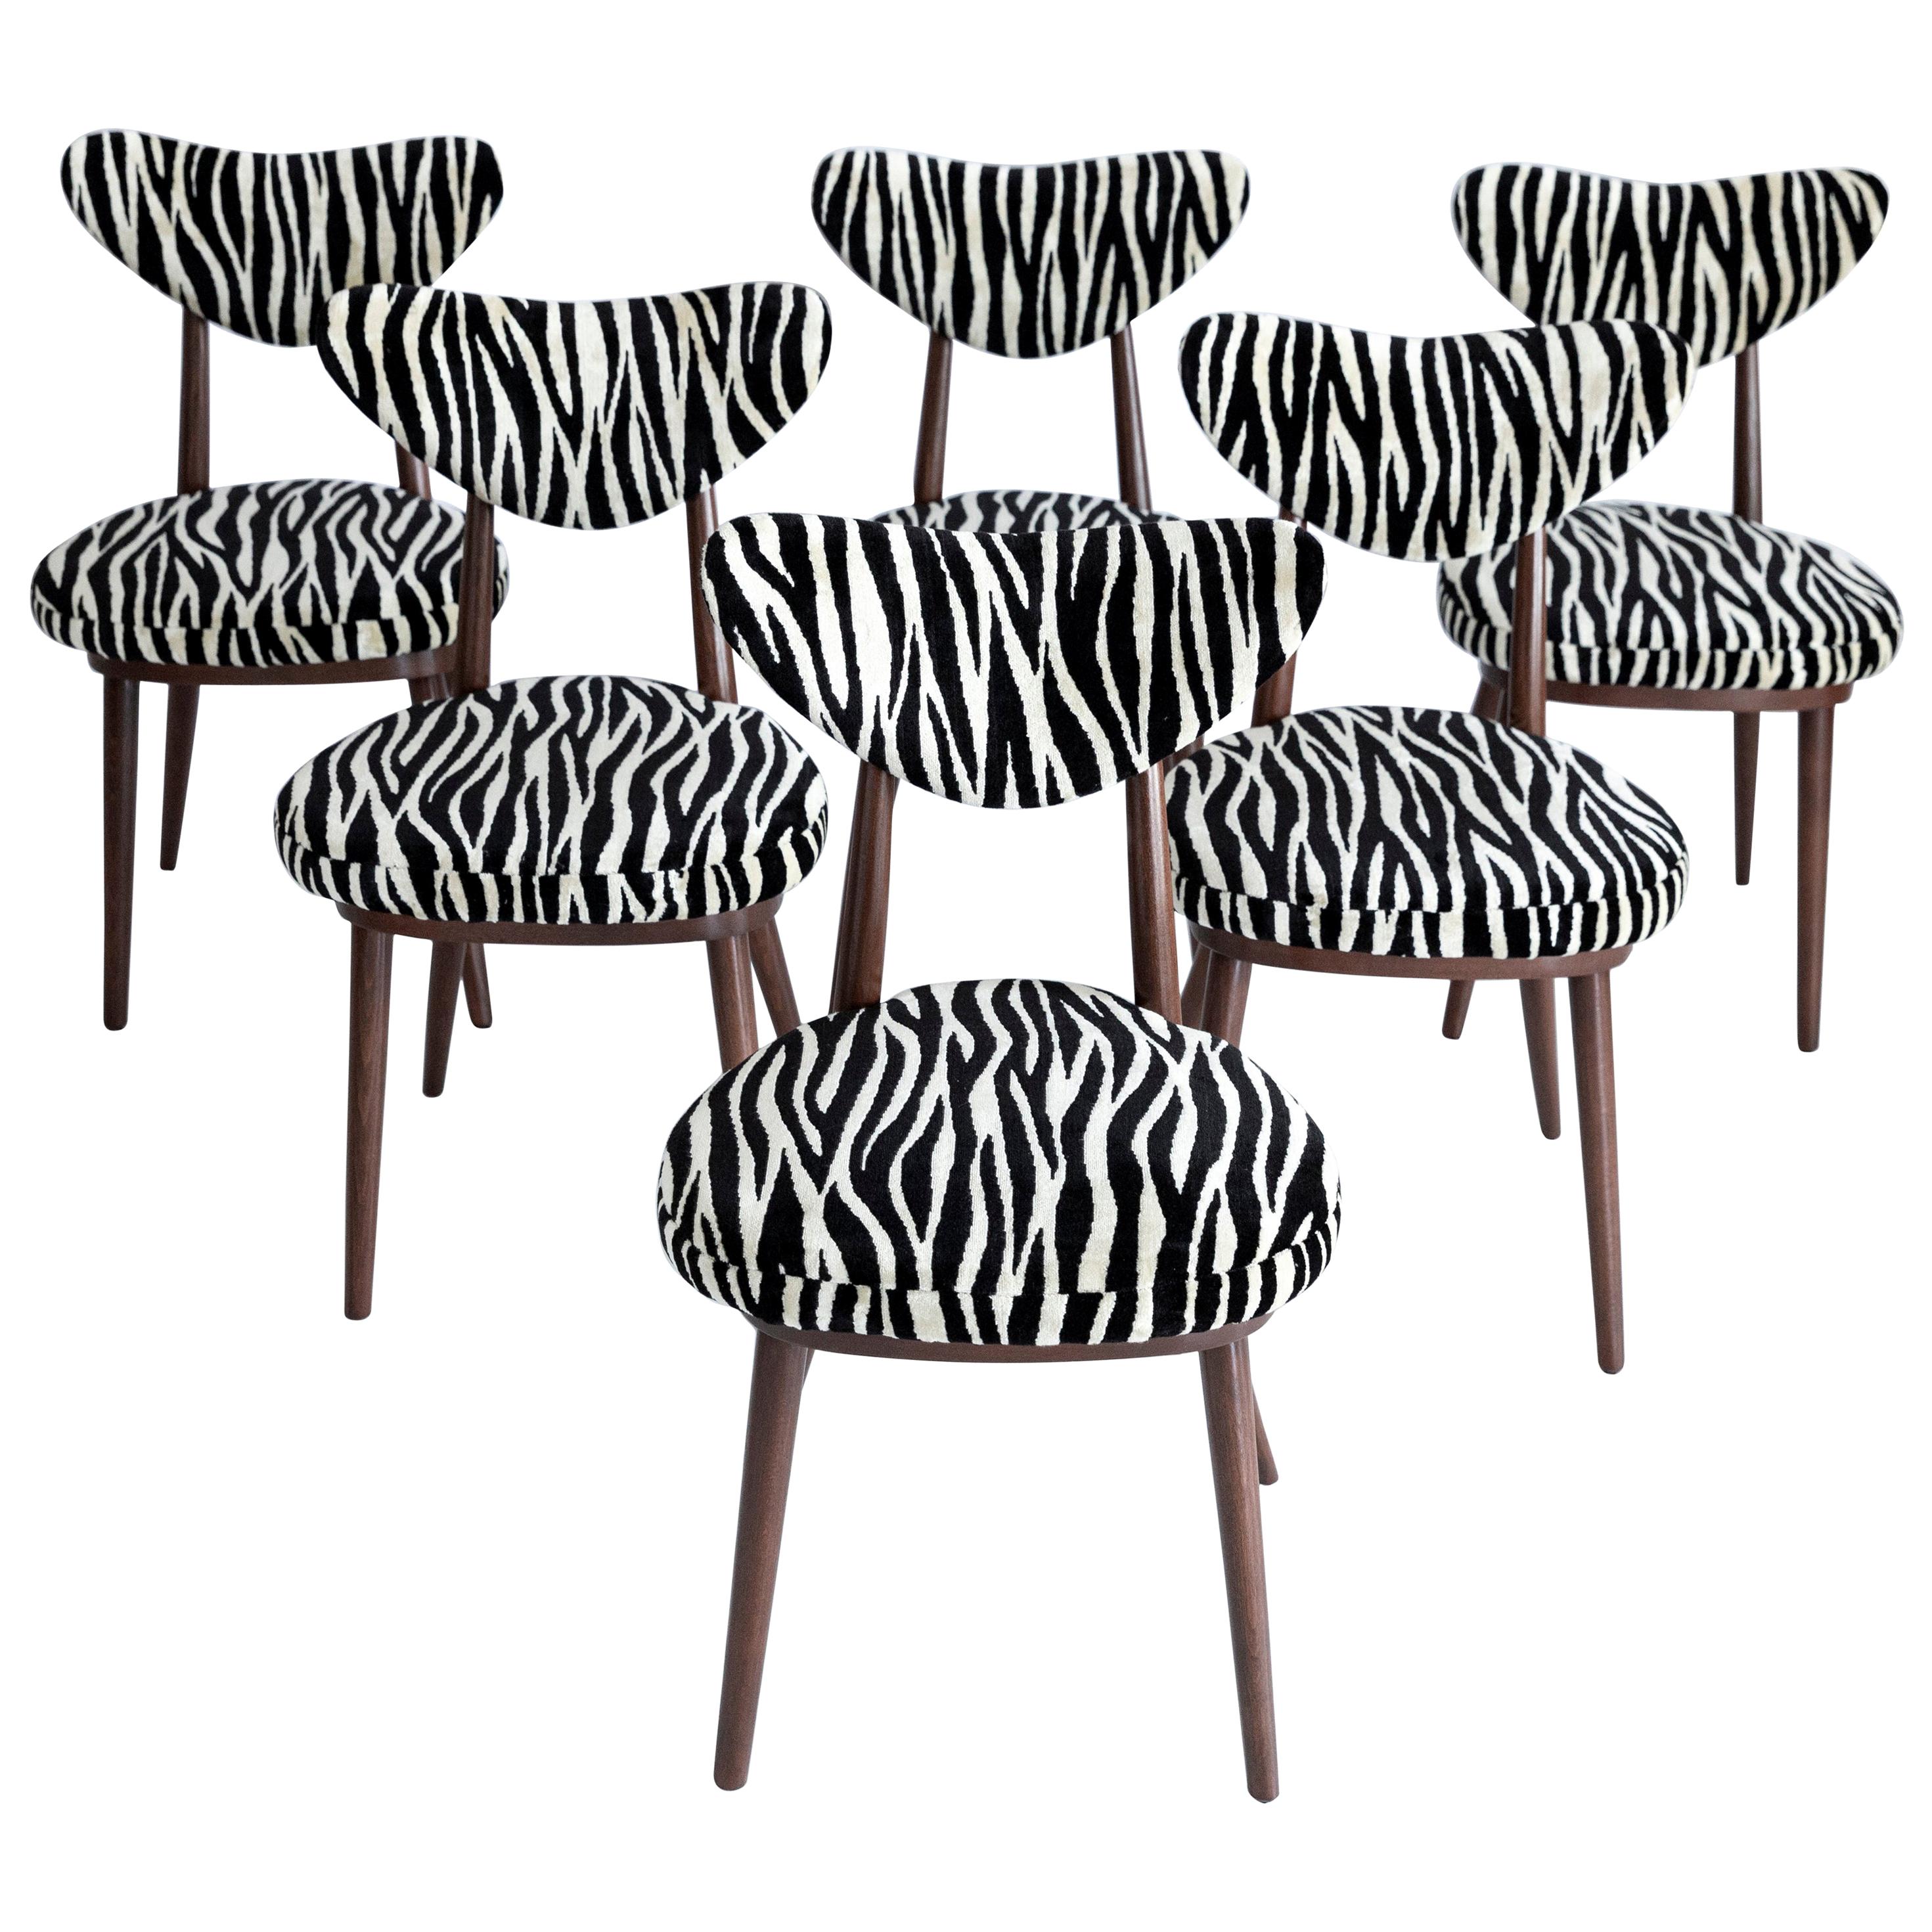 Six Midcentury Zebra Black White Heart Chairs, Hollywood Regency, Poland, 1960s For Sale